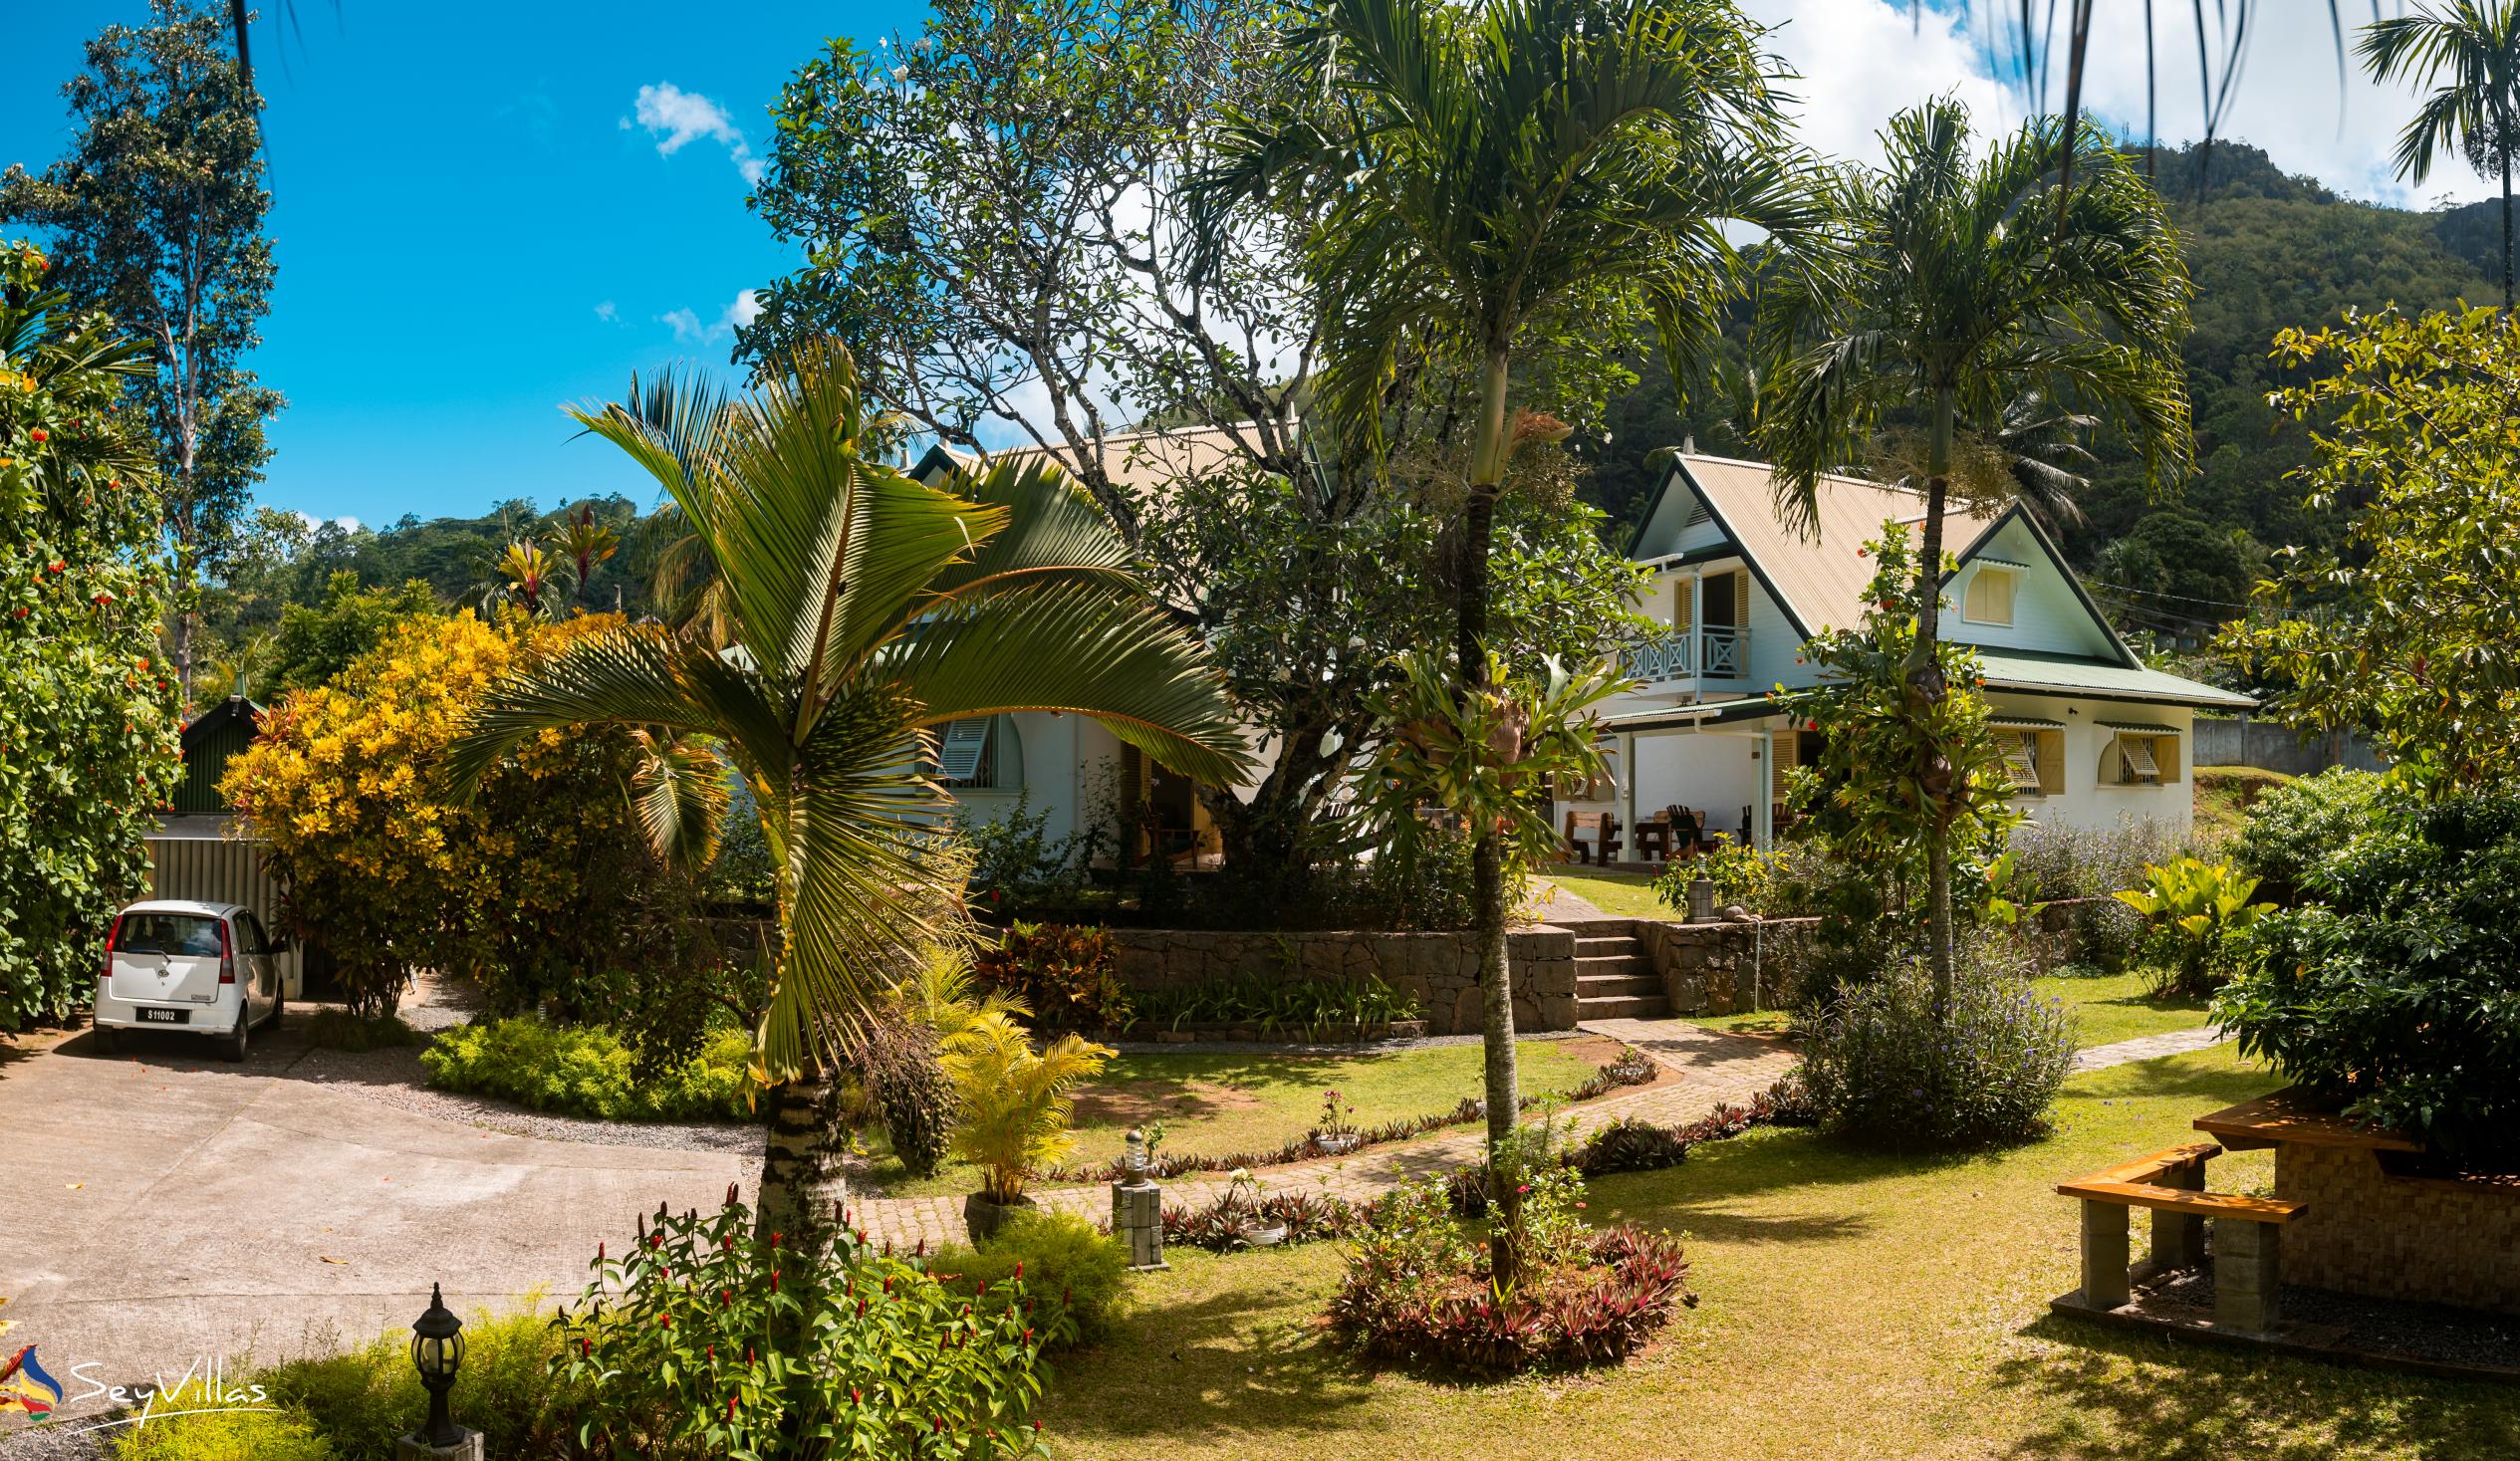 Foto 7: Villa Kordia - Aussenbereich - Mahé (Seychellen)